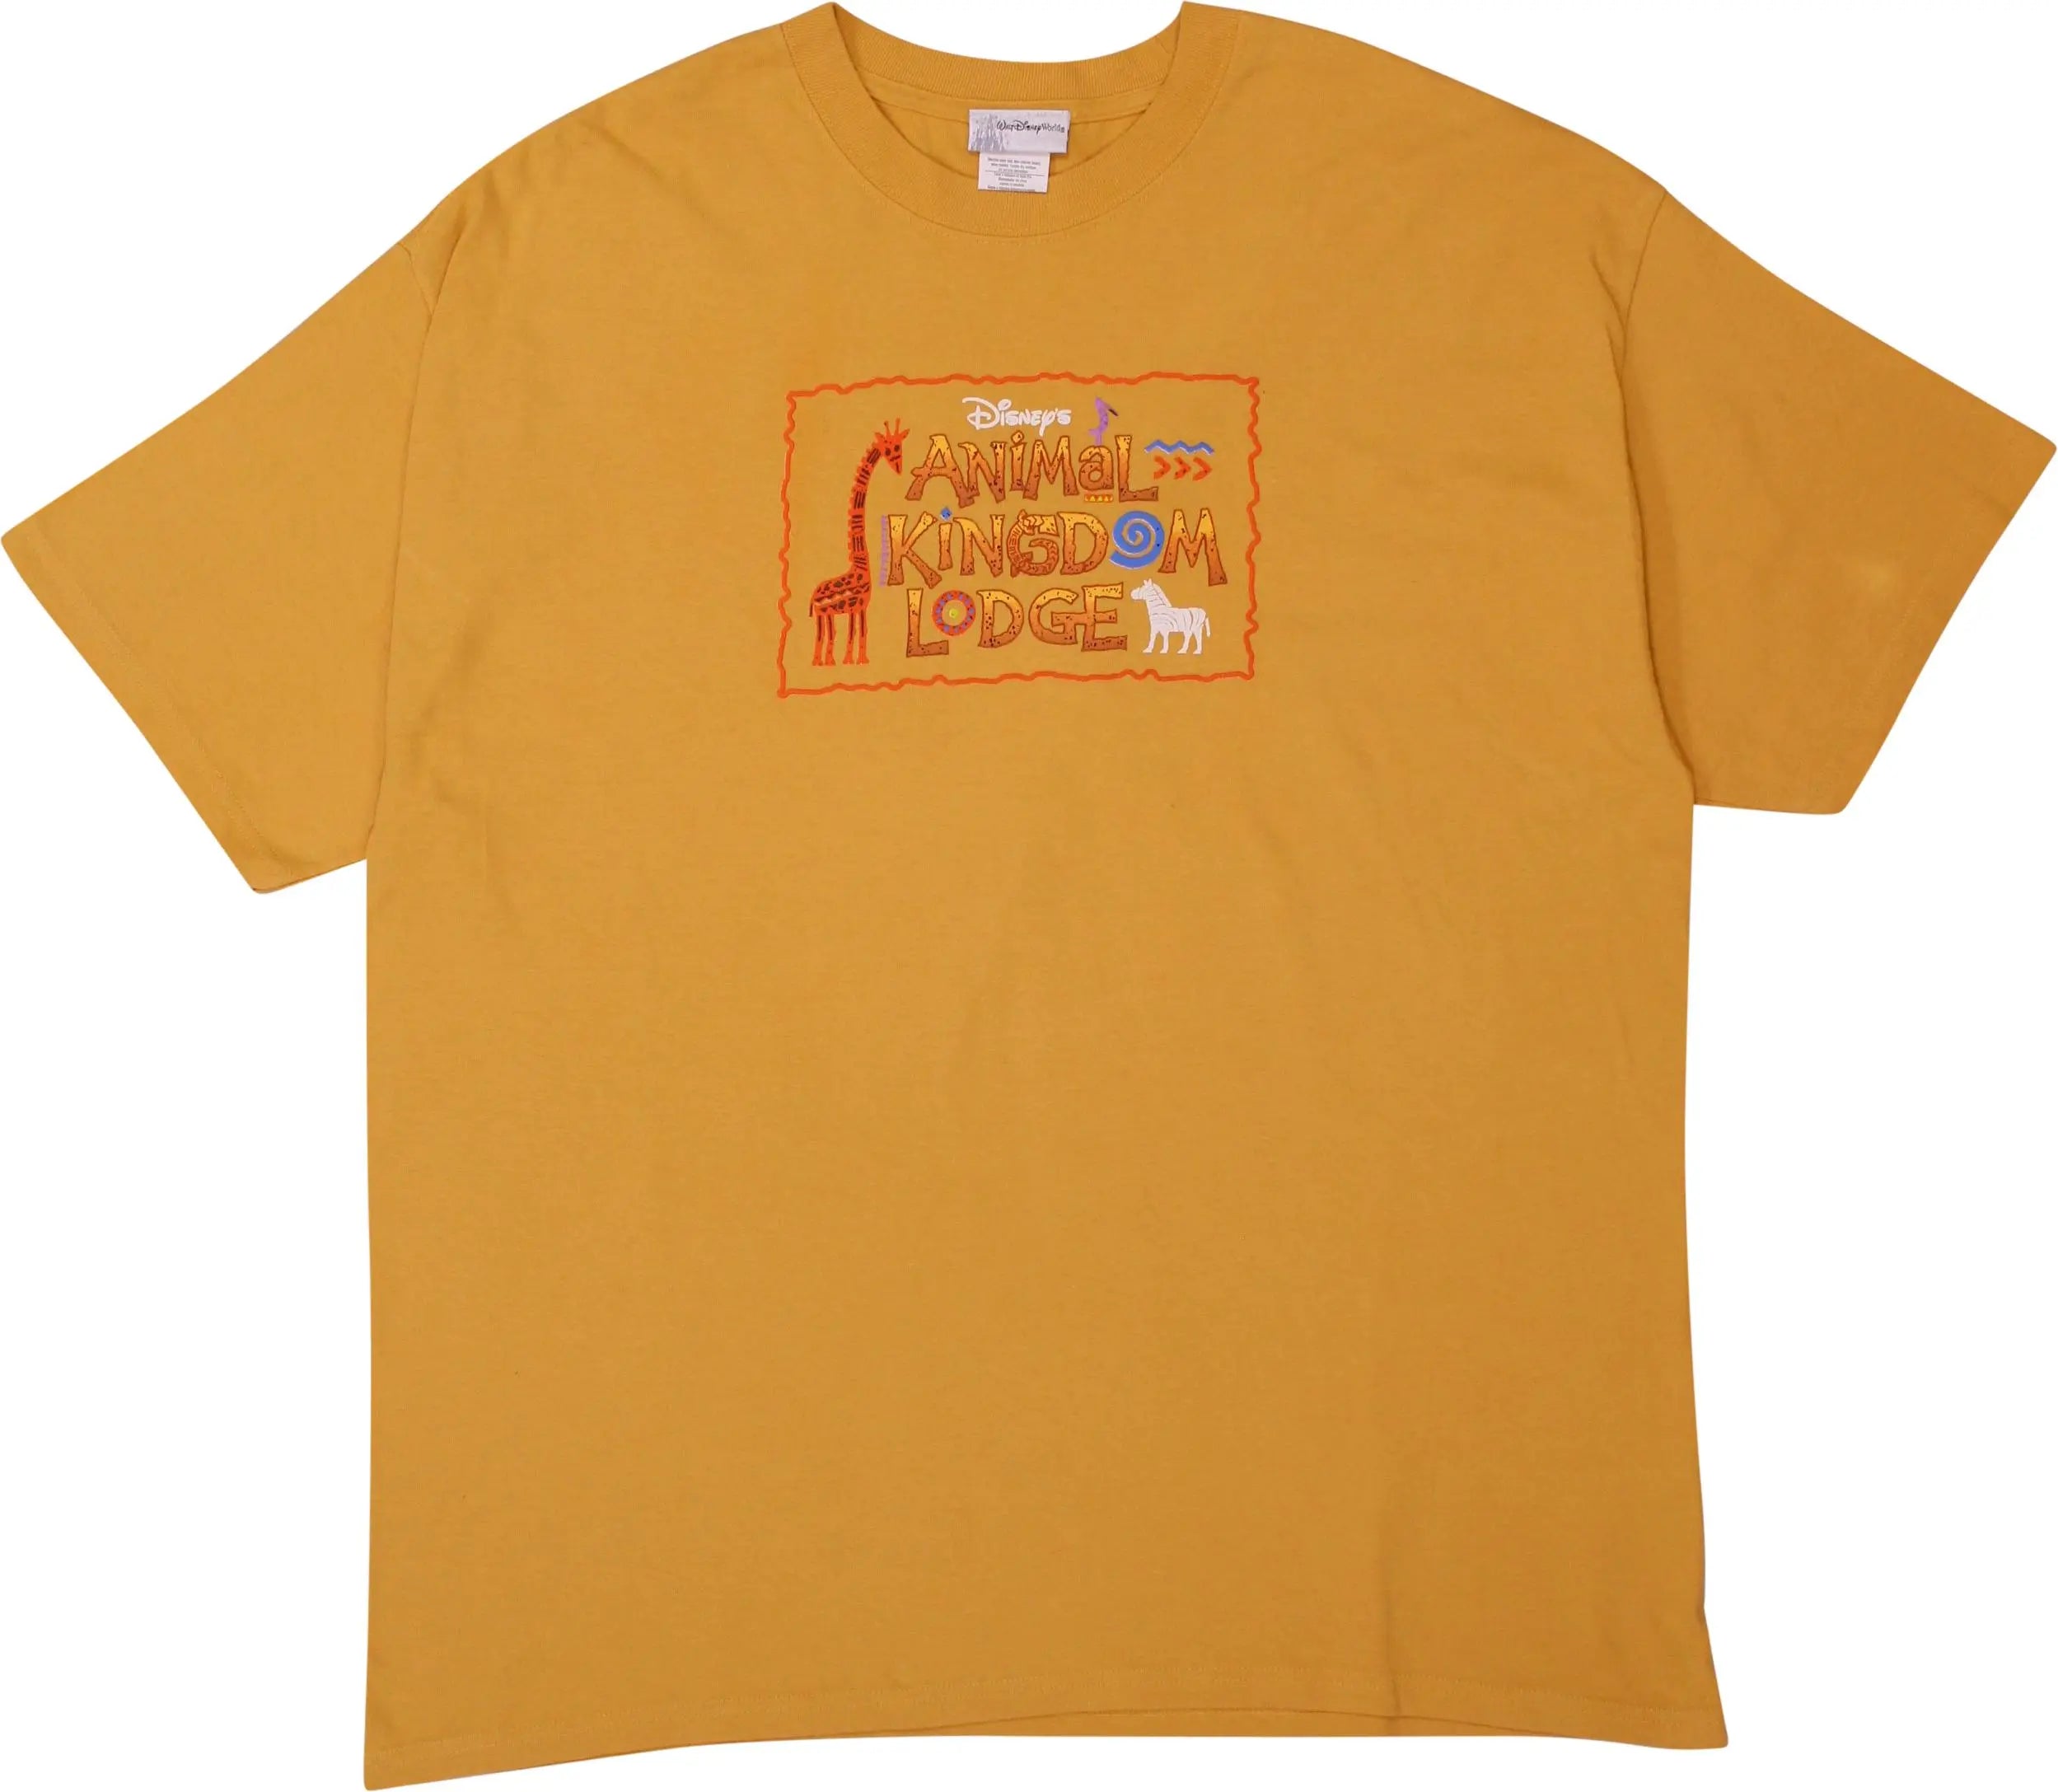 Disney - Animal Kingdom Lodge T-shirt by Walt Disney World- ThriftTale.com - Vintage and second handclothing